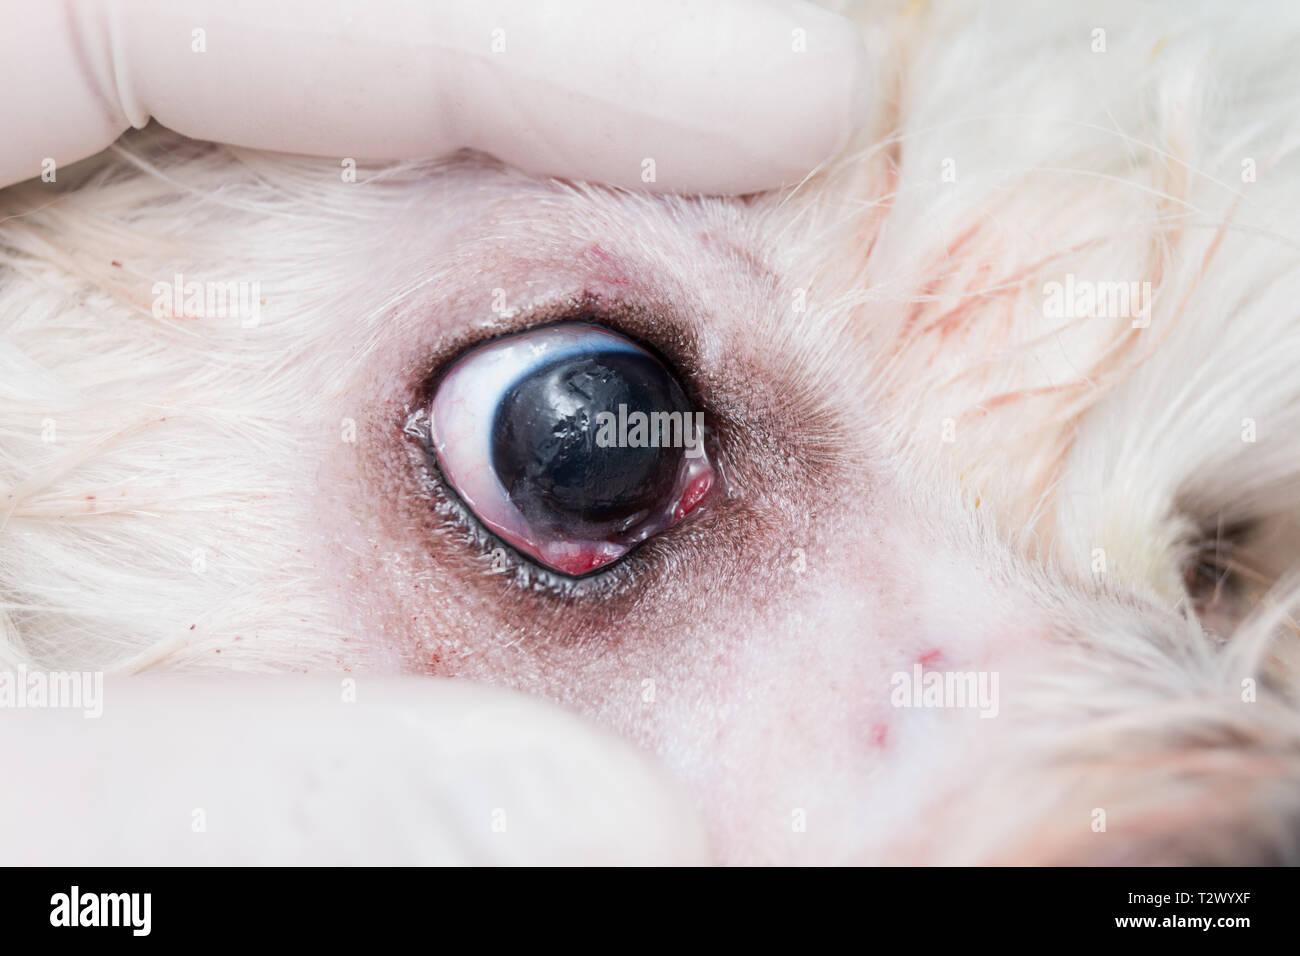 eye of a dog after cherry eye surgery Stock Photo - Alamy